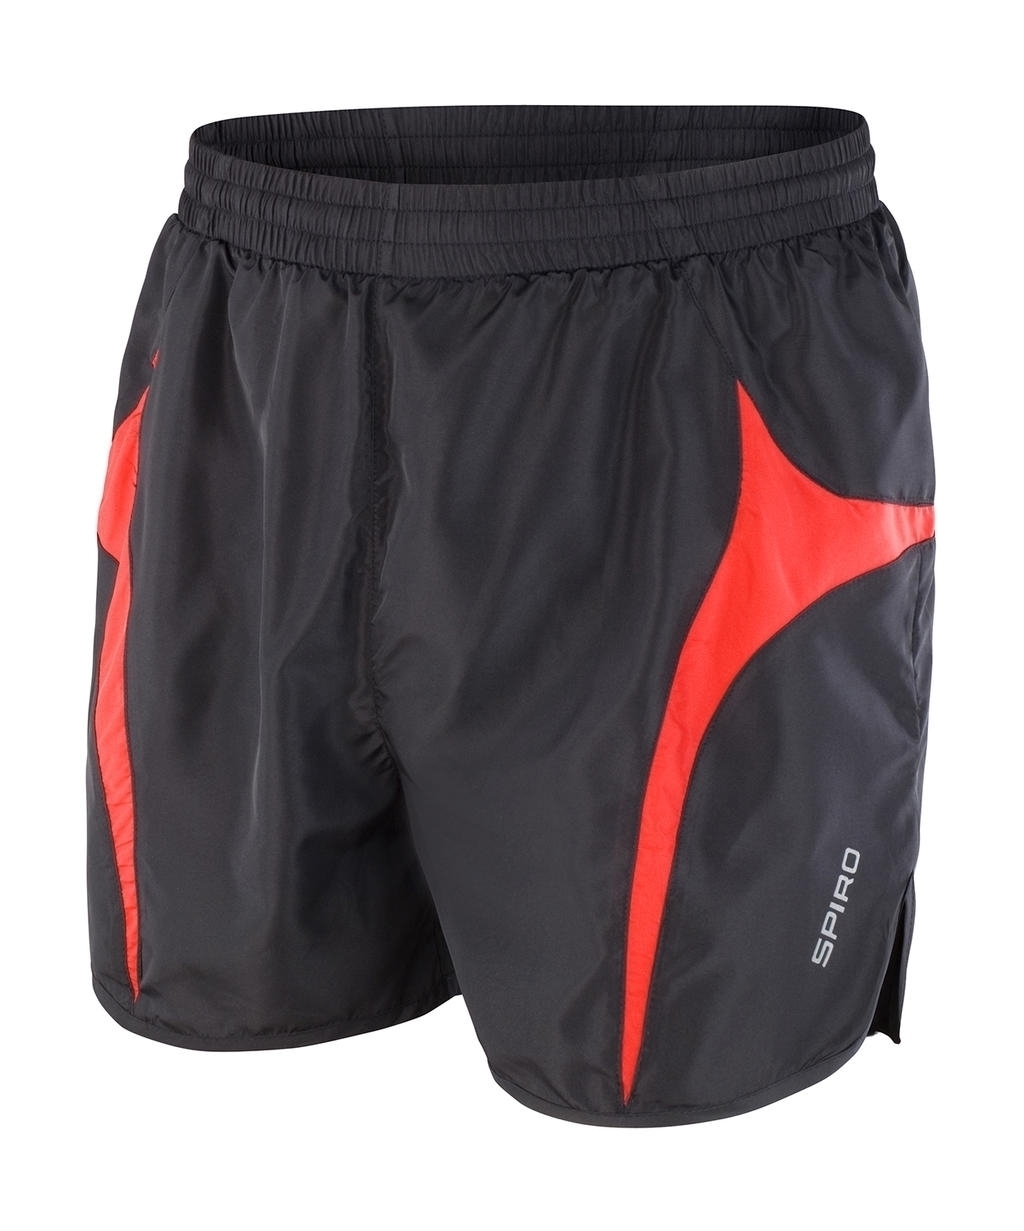 Unisex Micro Lite Running Shorts Black/Red Noir